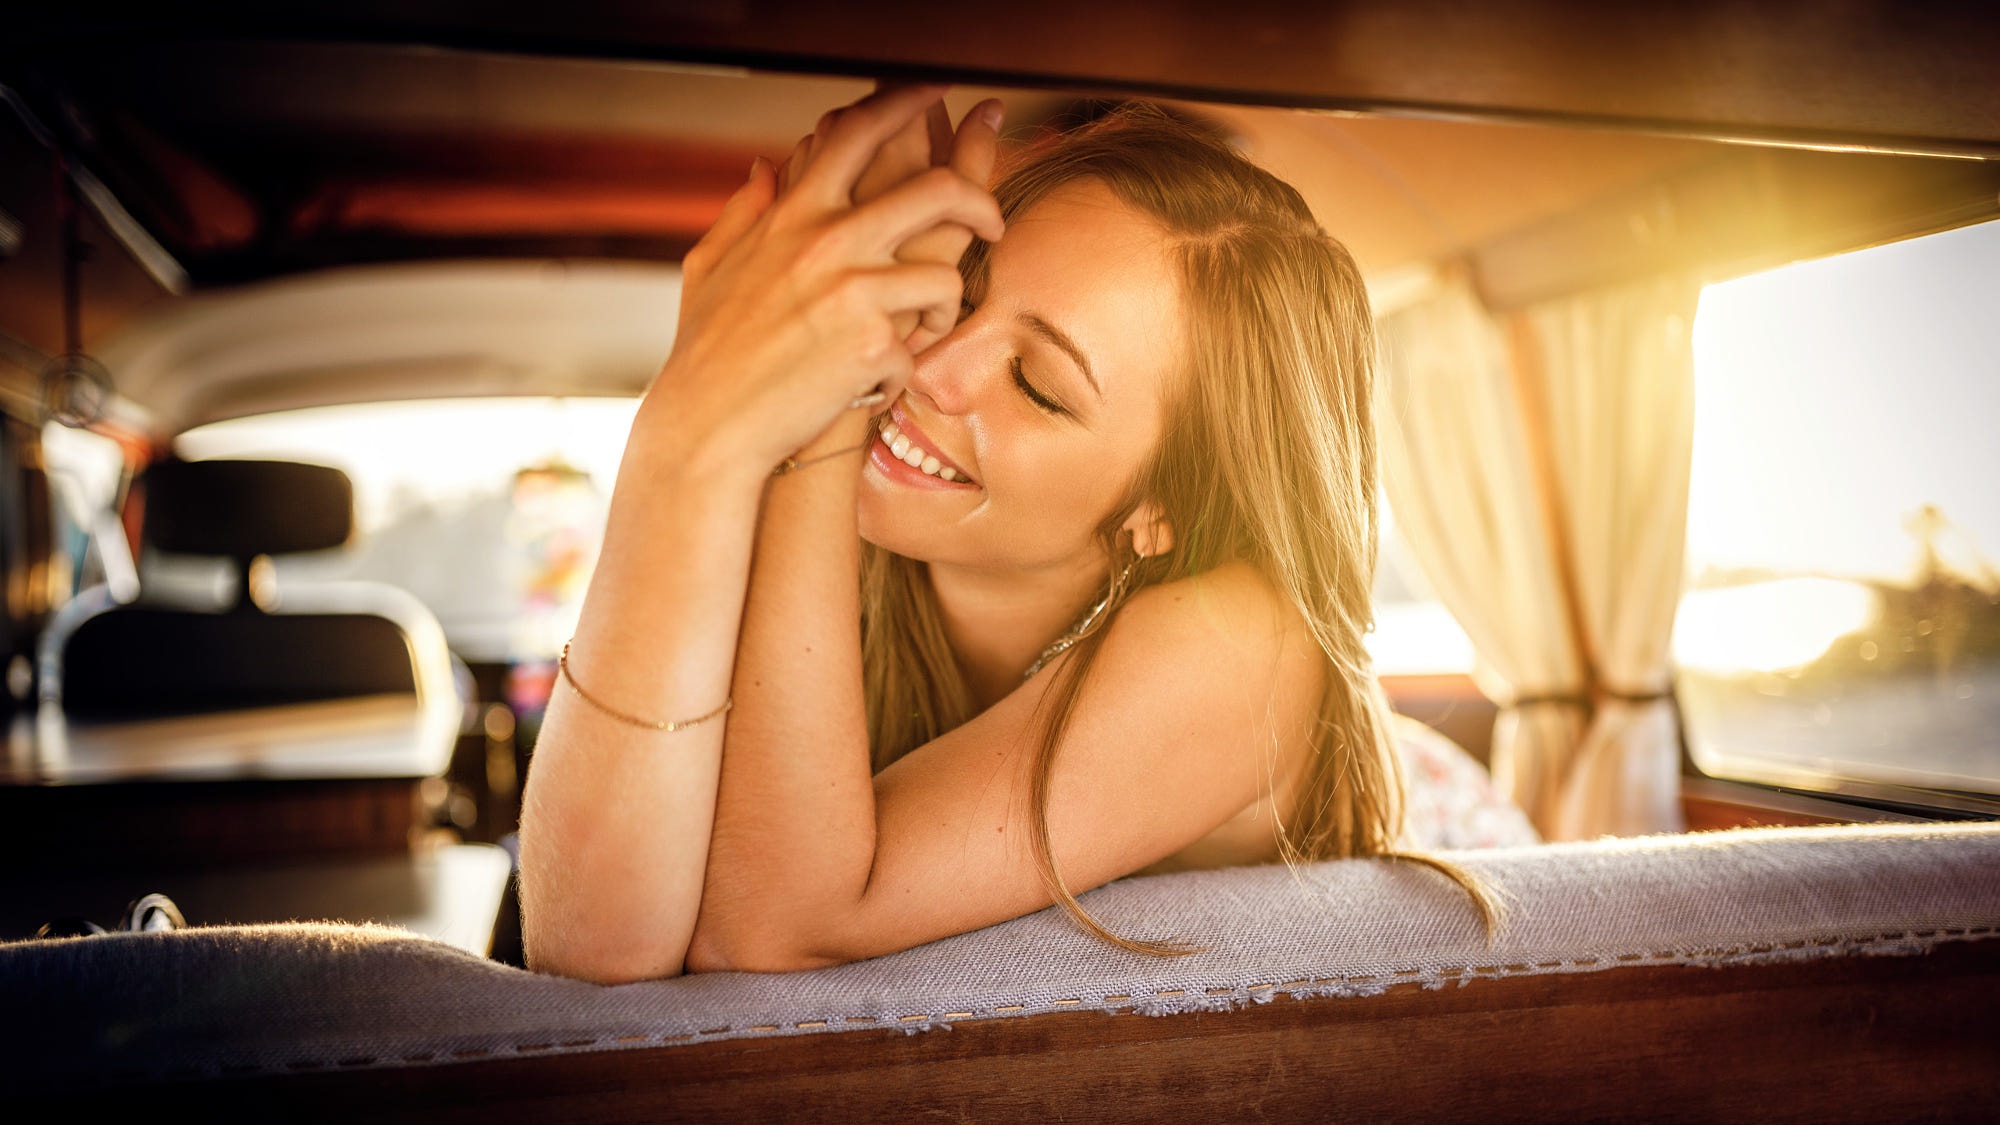 Women Smiling Model Car Interior Inside A Car Blonde 2000x1125